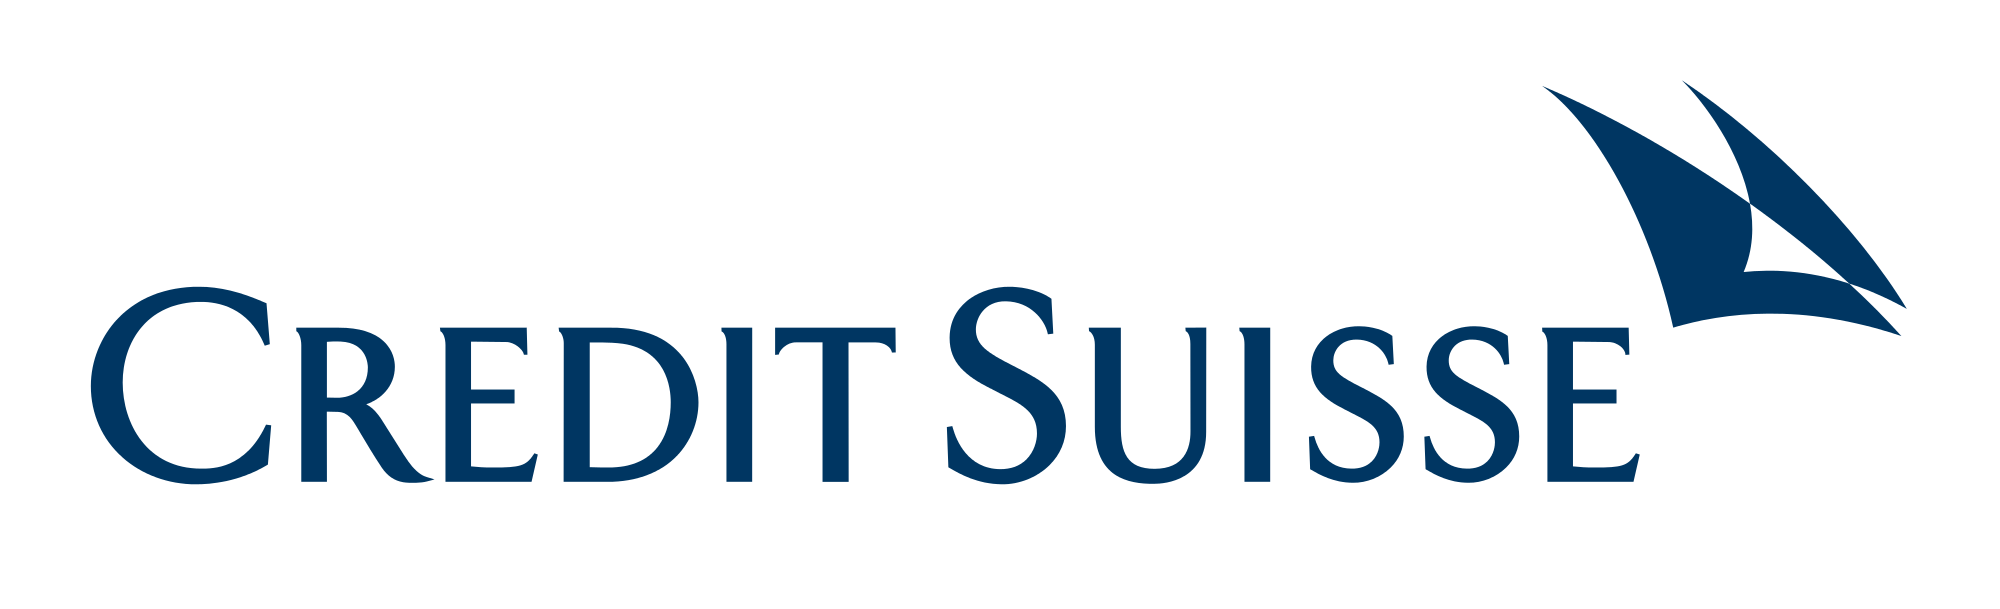 Logo Credit Suisse PNG - 99028